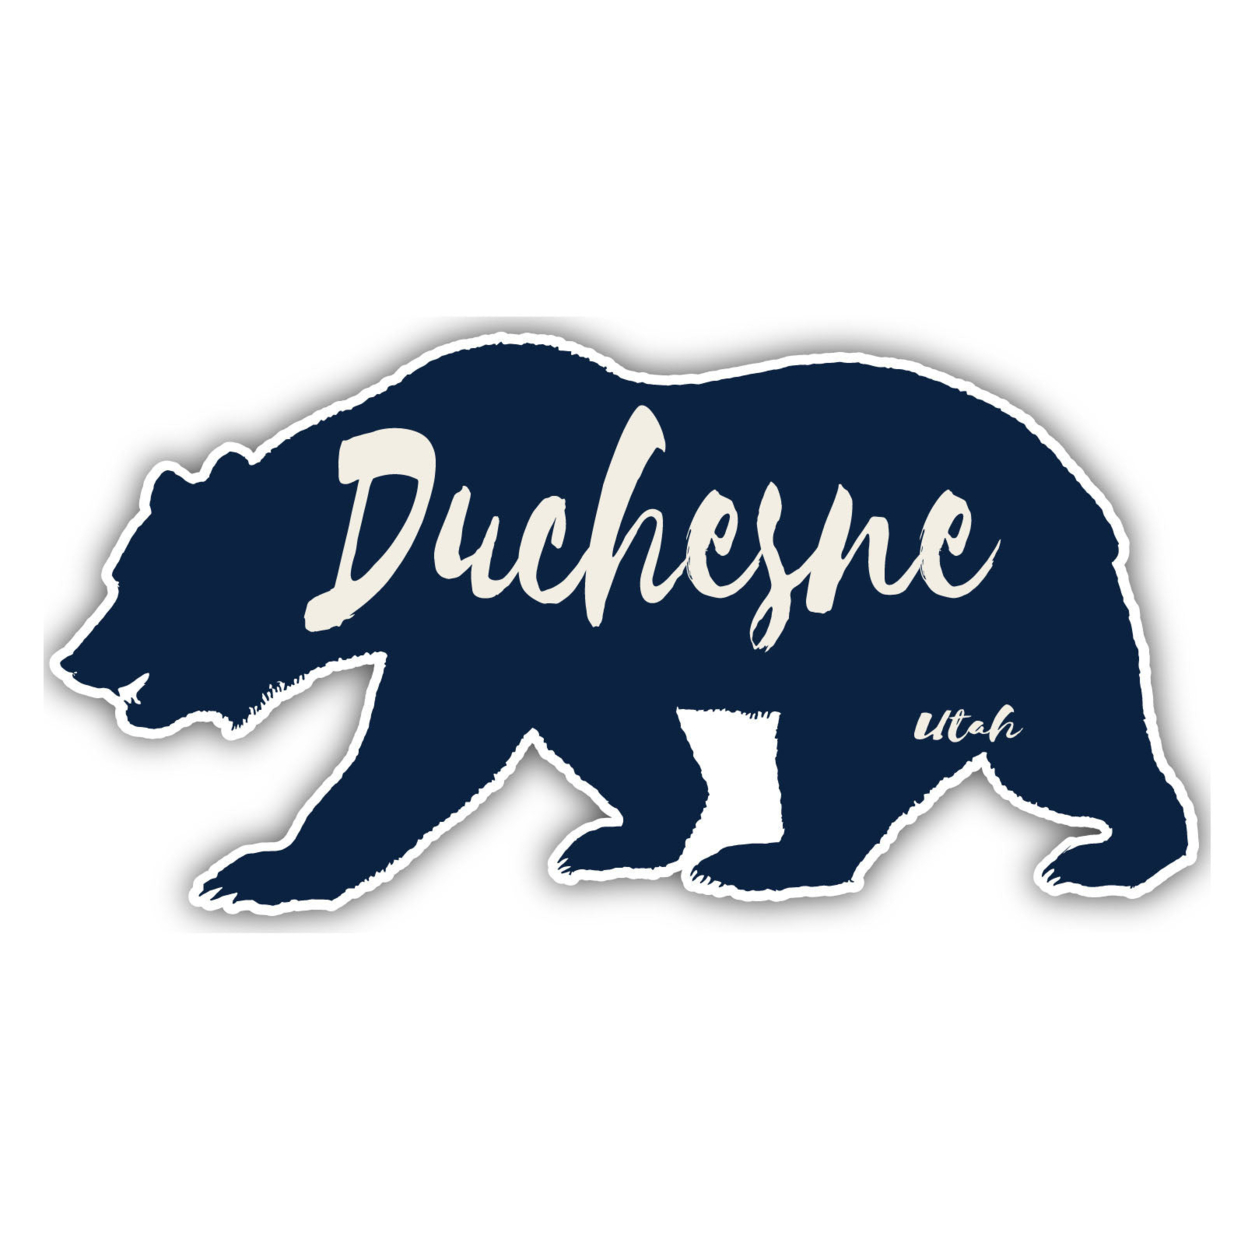 Duchesne Utah Souvenir Decorative Stickers (Choose Theme And Size) - Single Unit, 10-Inch, Bear